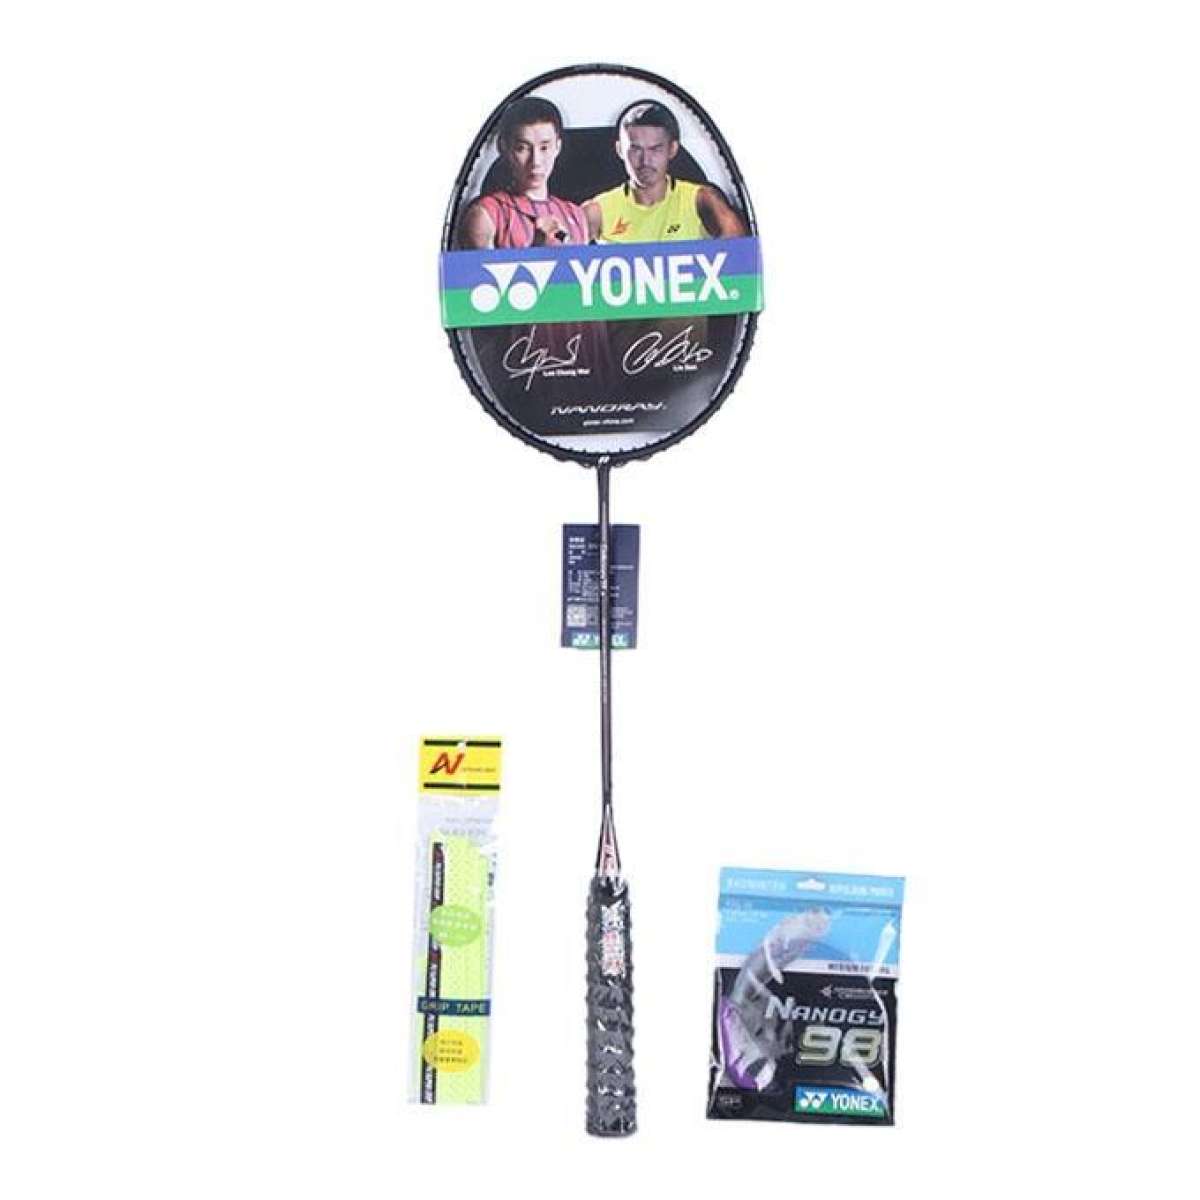 Original Yonex Badminton Racket - Black